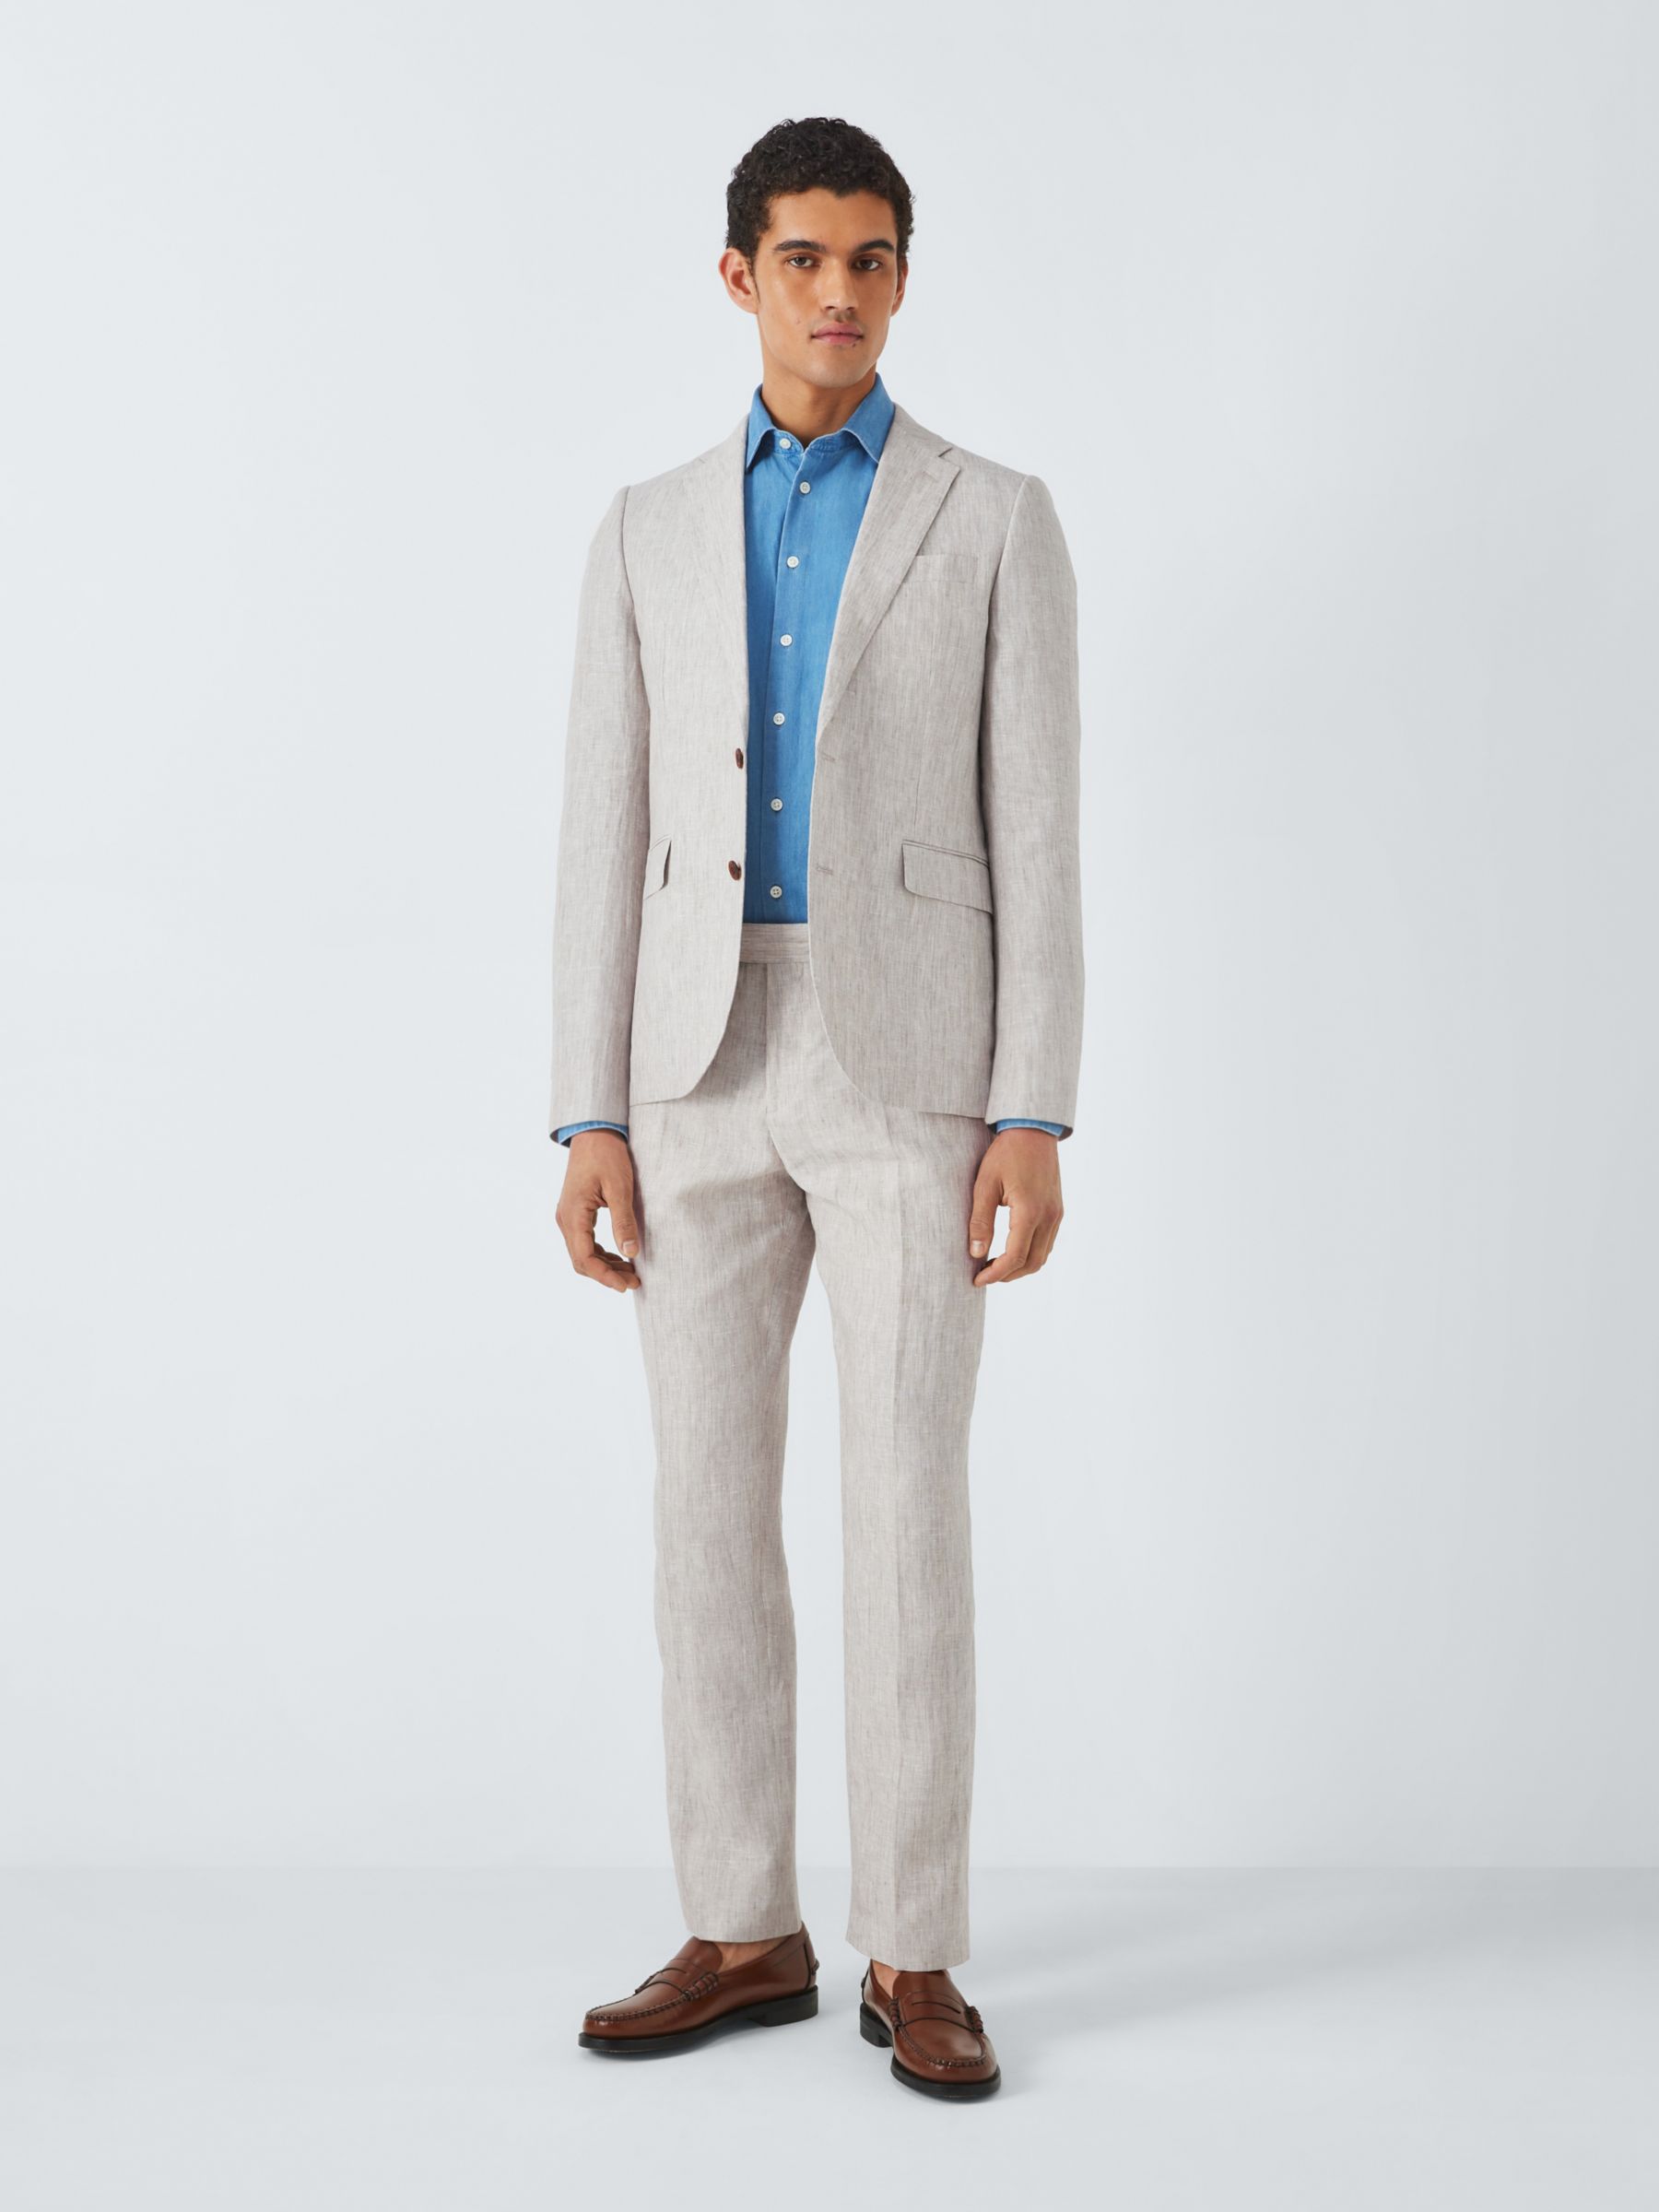 John Lewis Cambridge Linen Single Breasted Regular Fit Suit Jacket, Stone, 42L